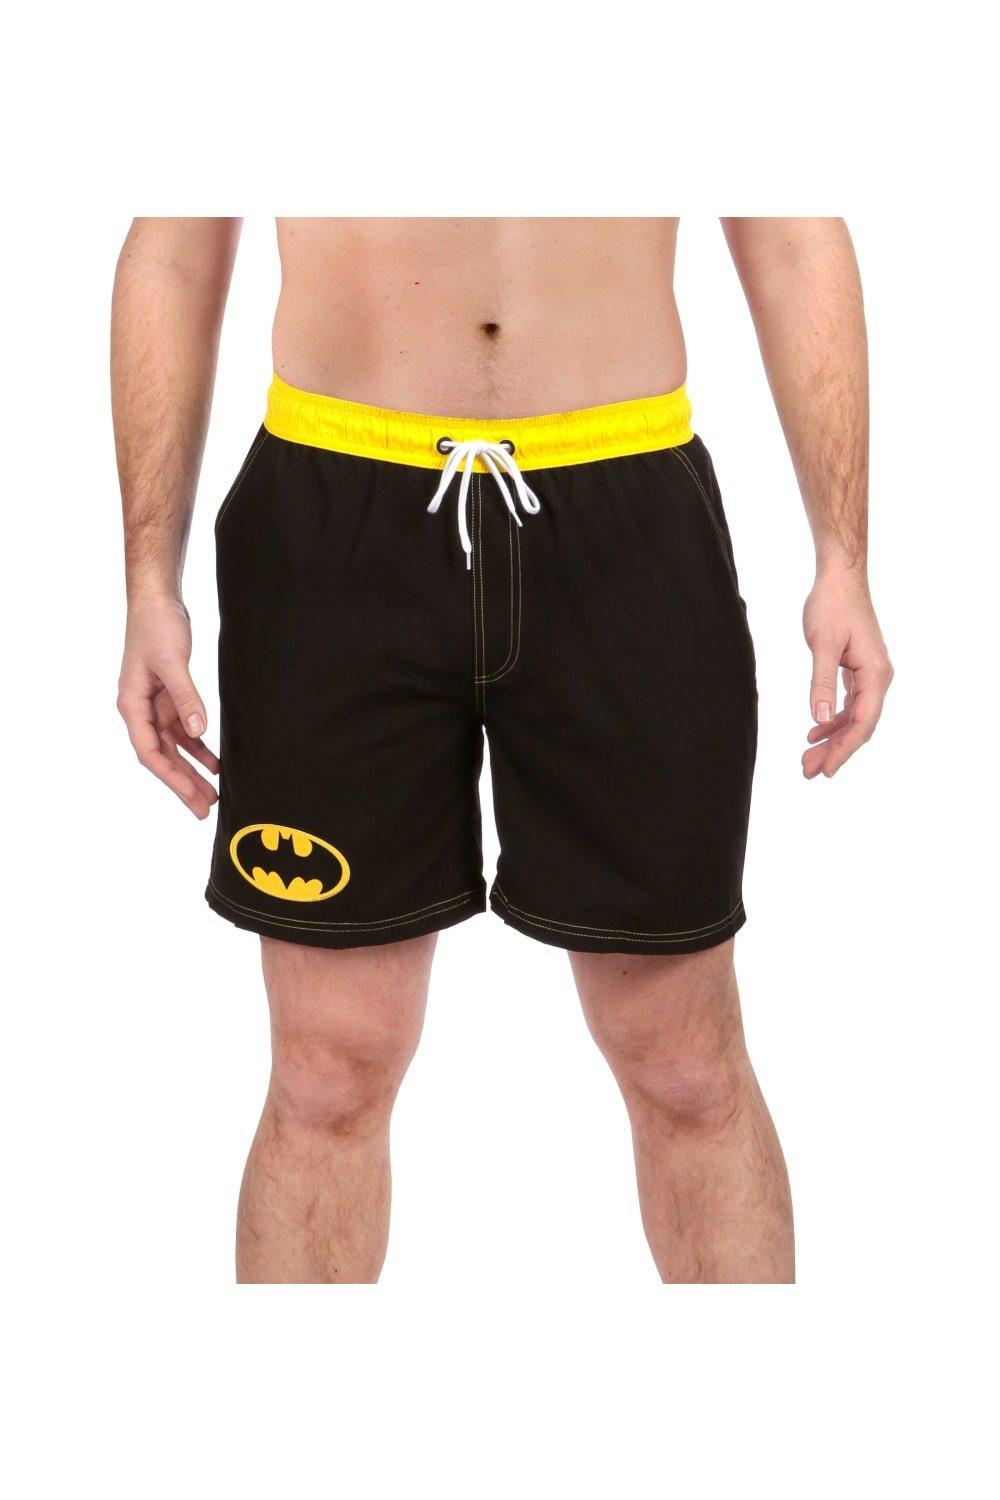 Batman Swim Shorts With Pockets